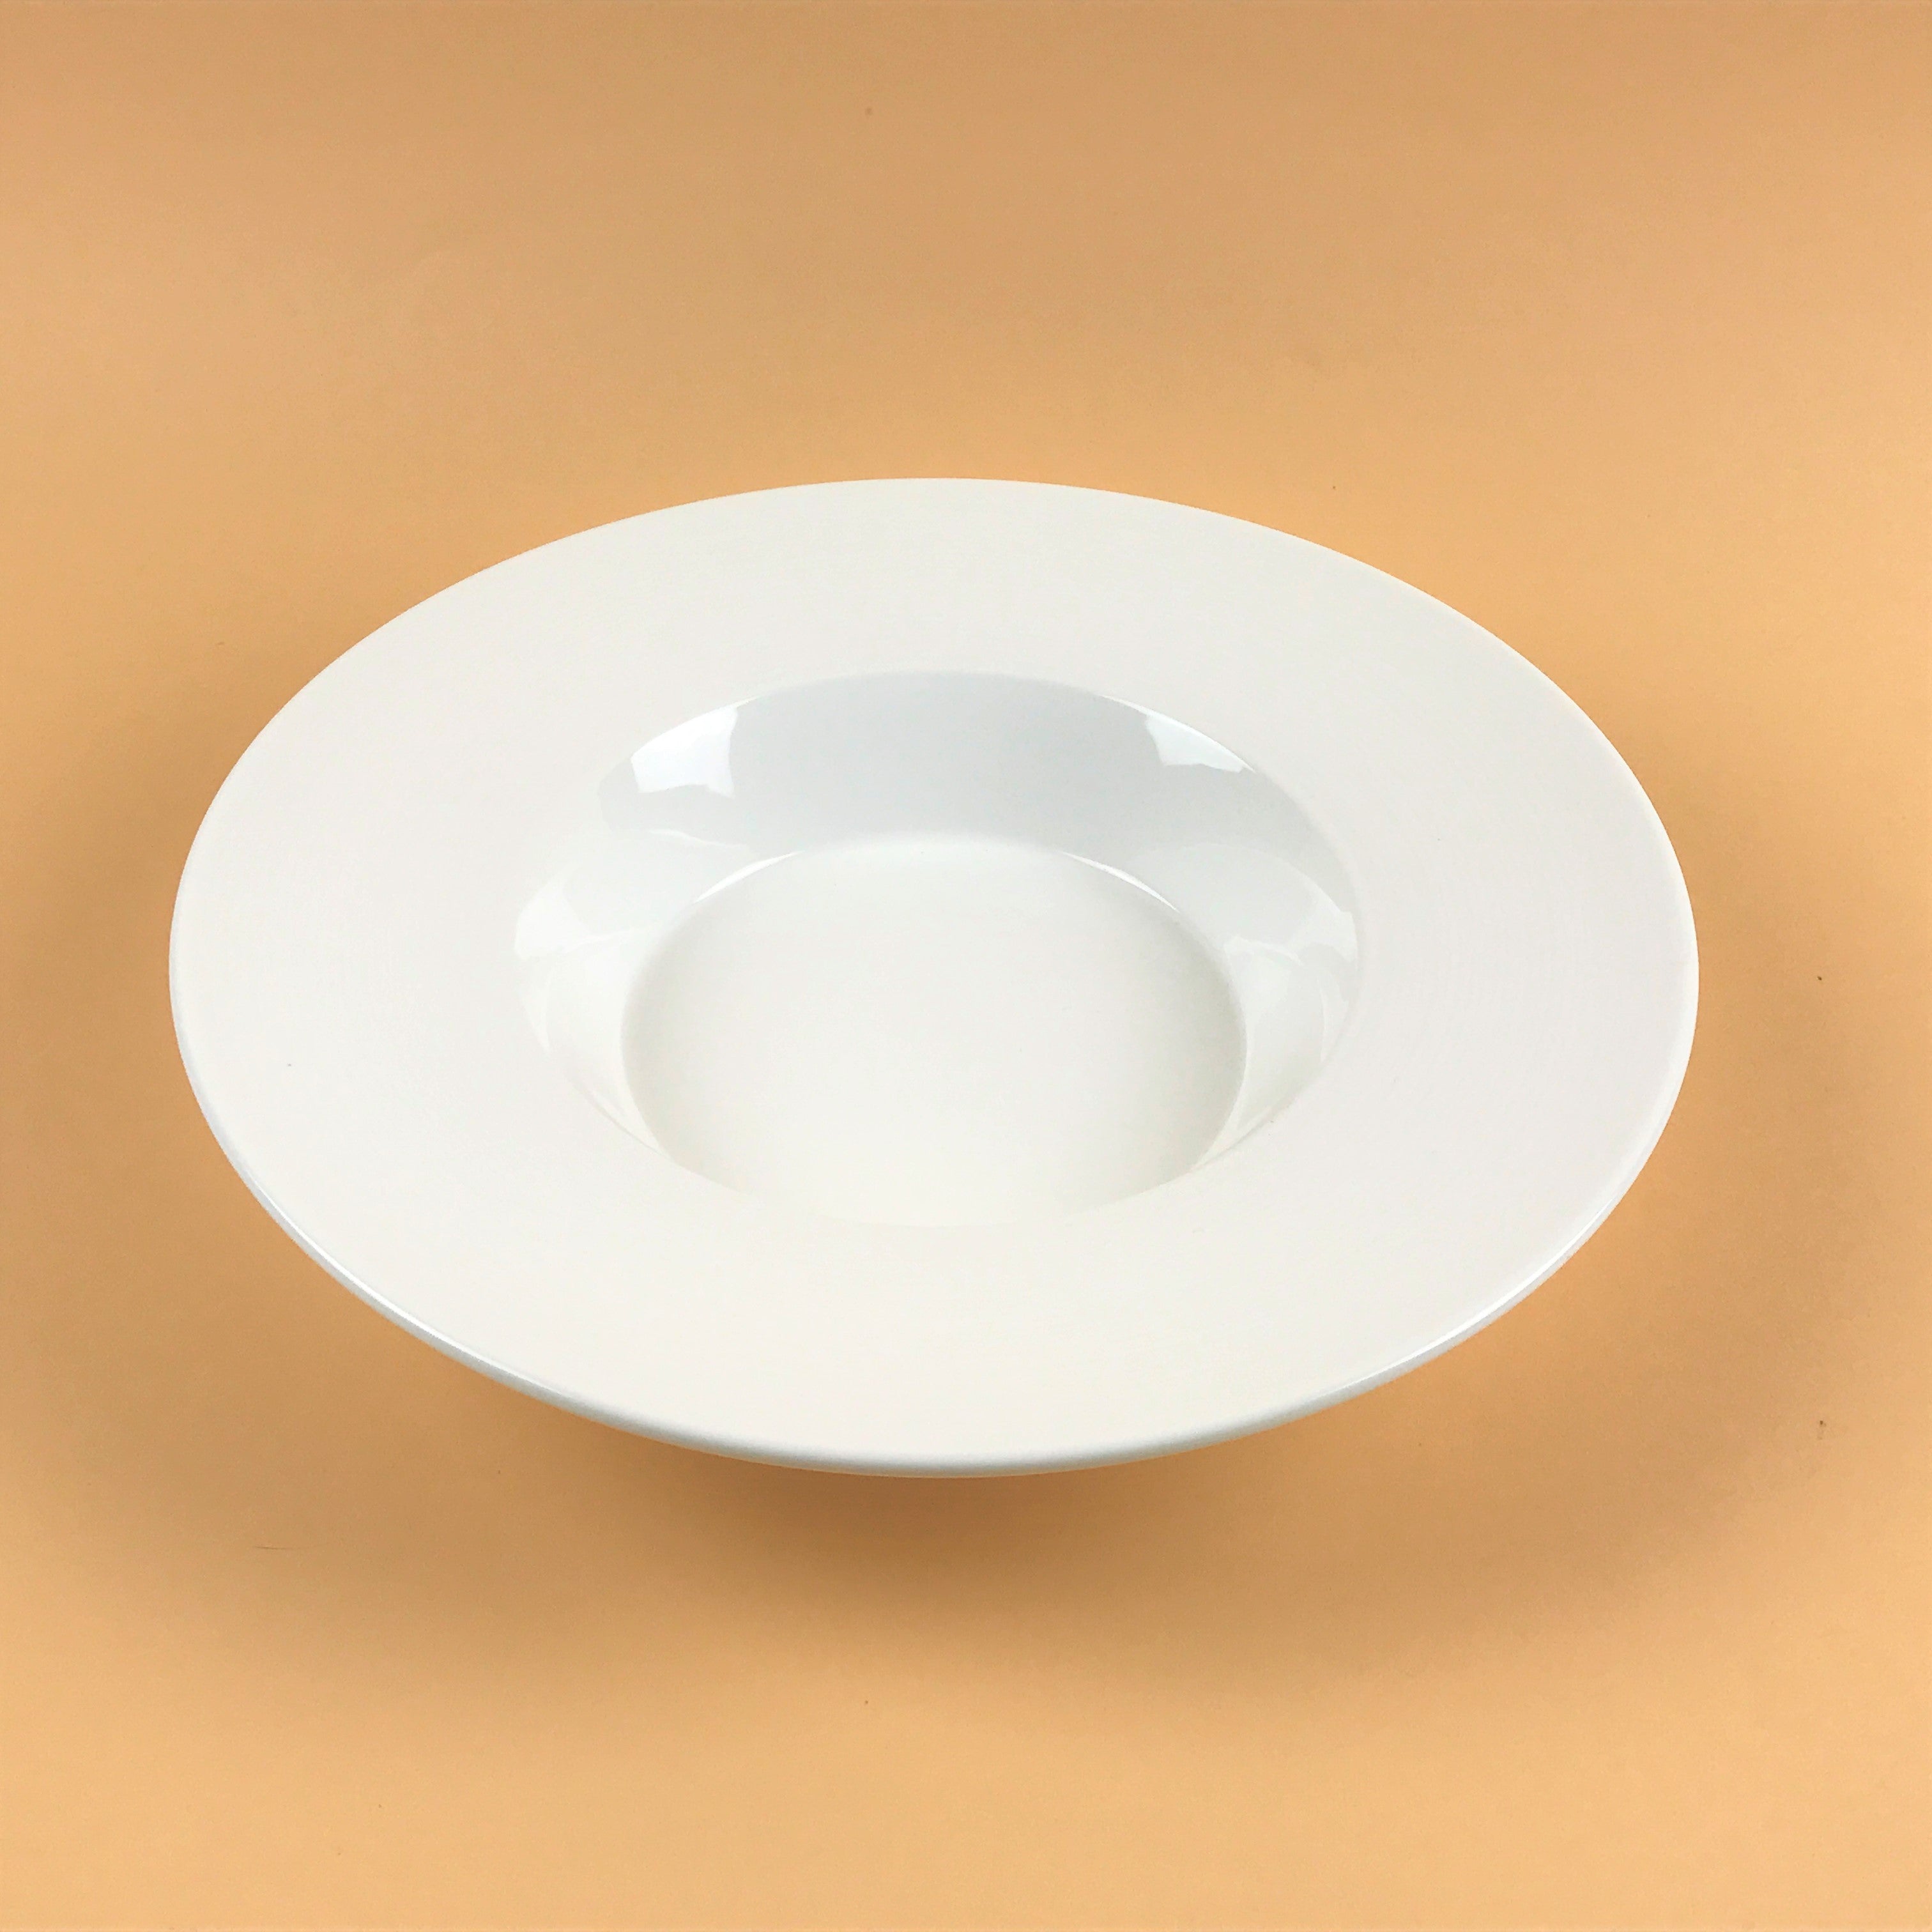 Durable White Wide Rim Bowl Pasta Plates Straw Hat Plates Restaurant Supply Bowery Discount Sale OSARA New York